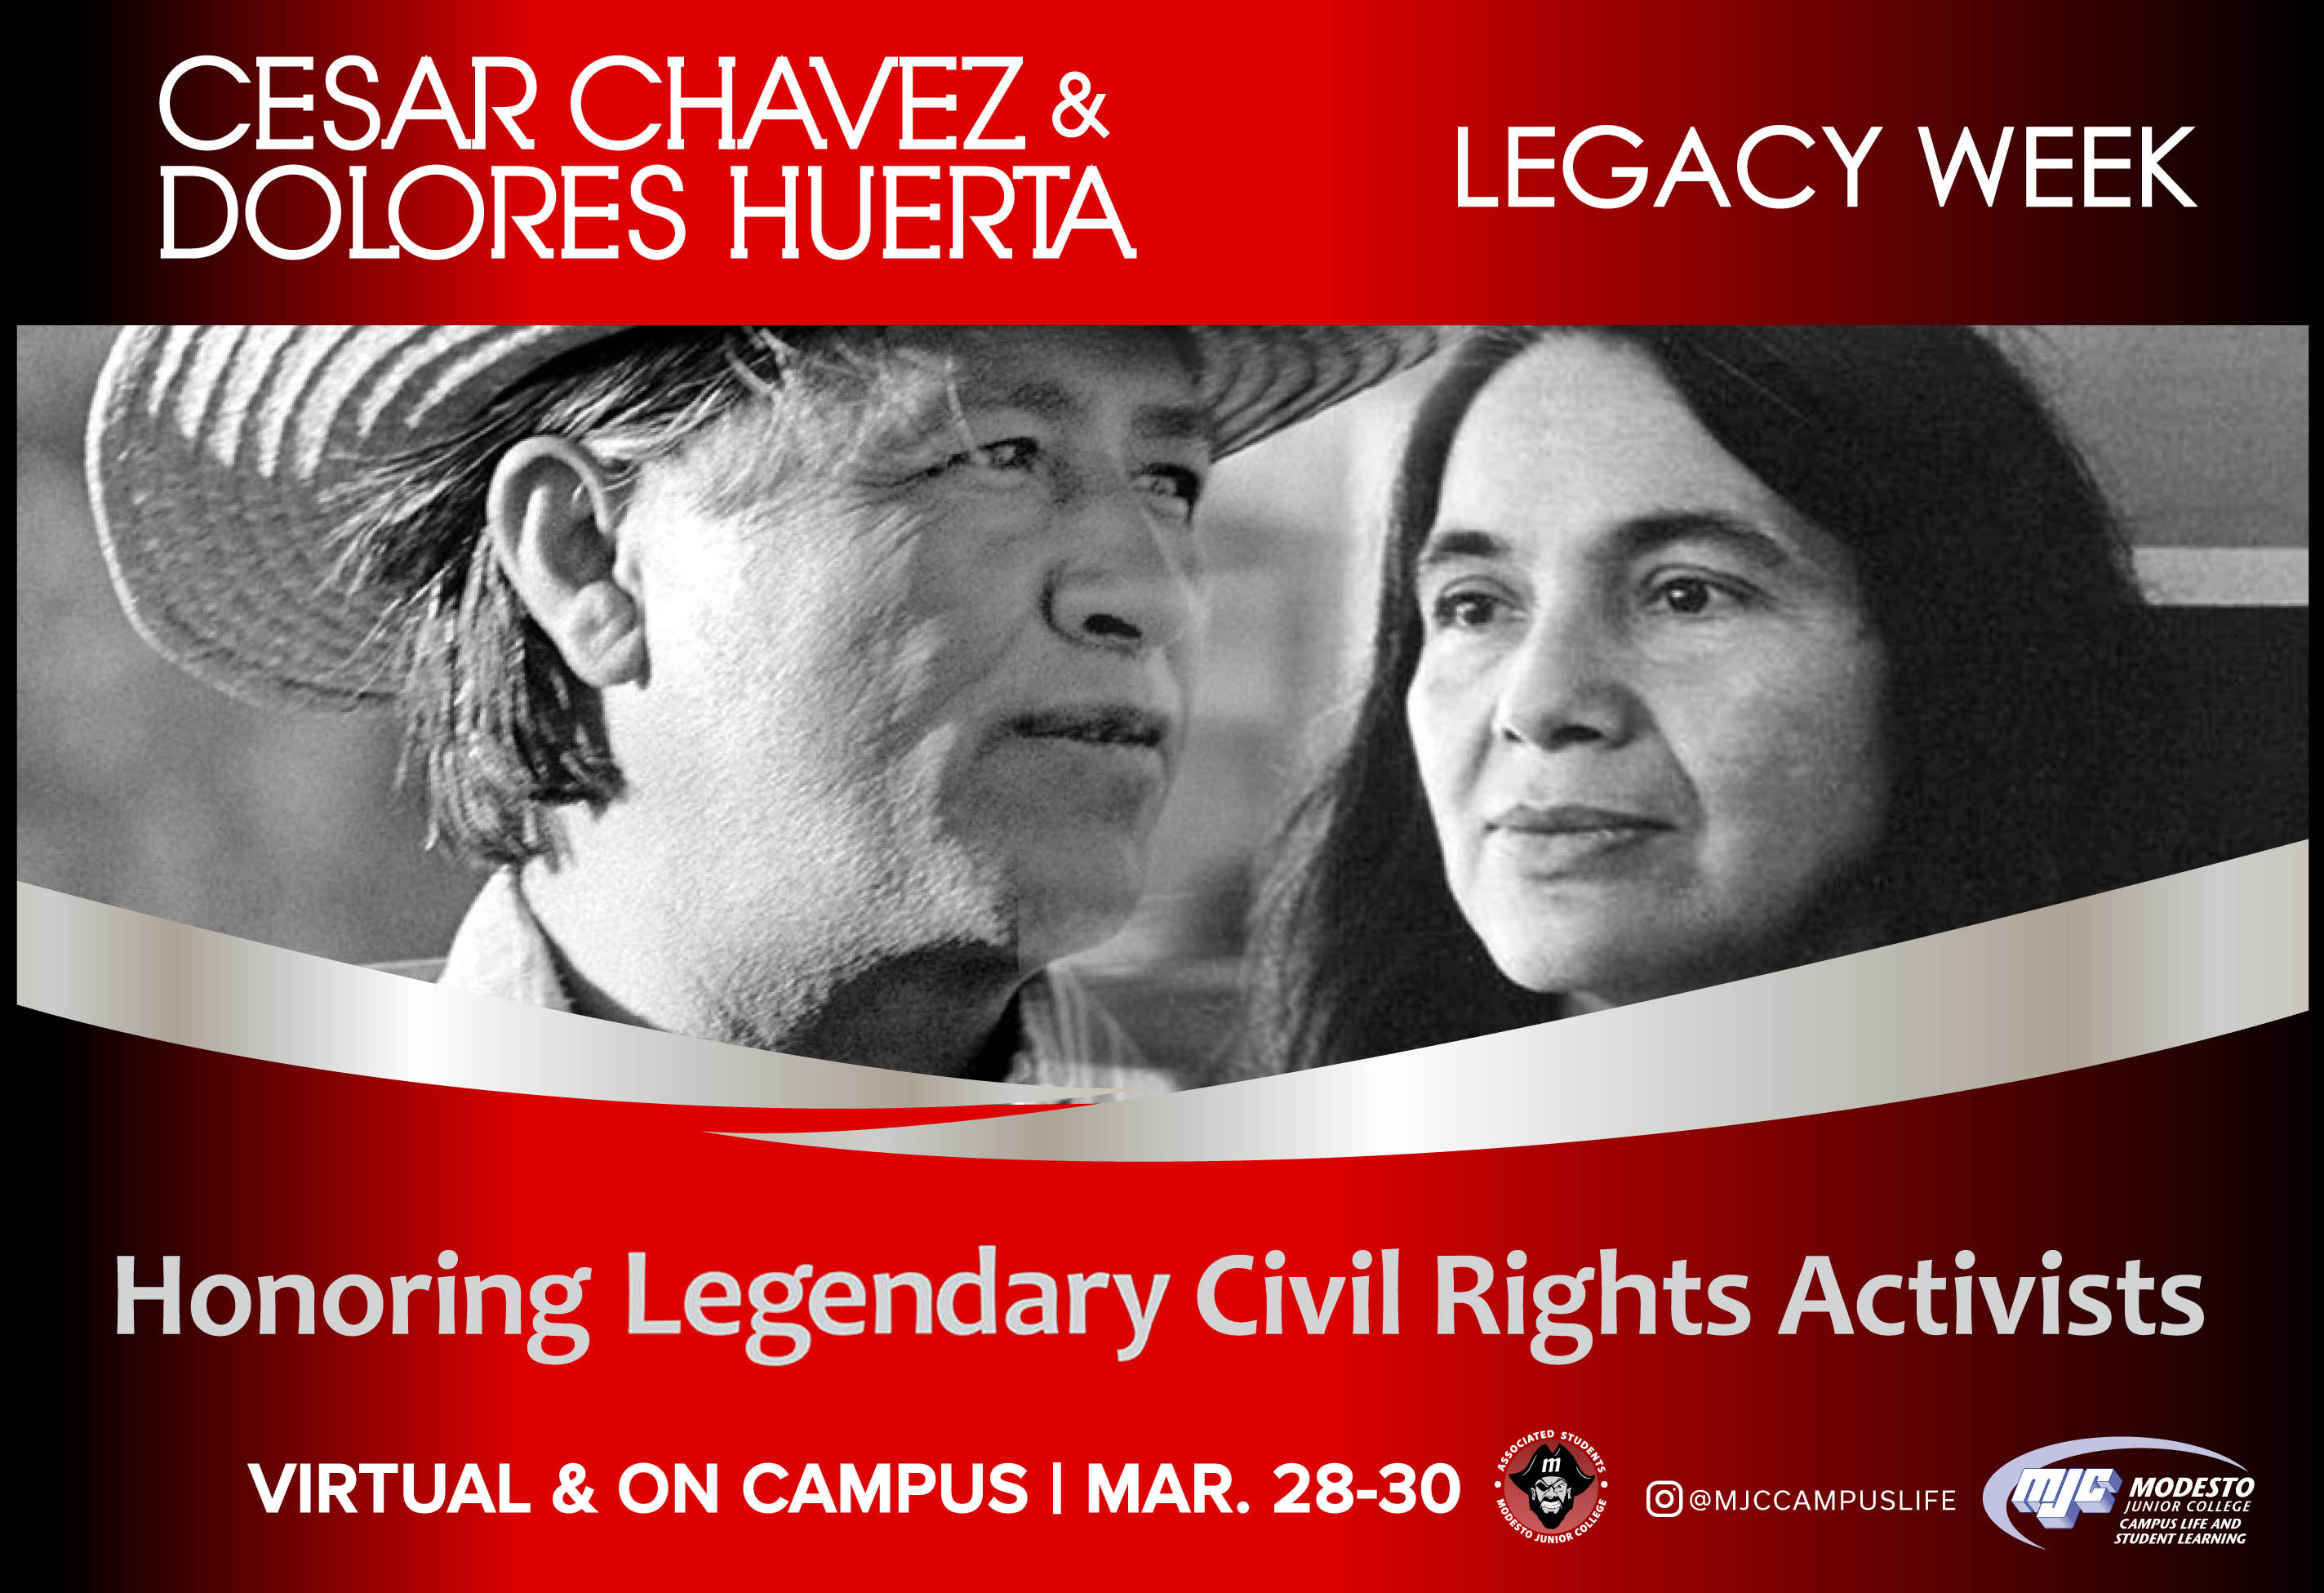 Cesar Chavez and Dolores Huerta